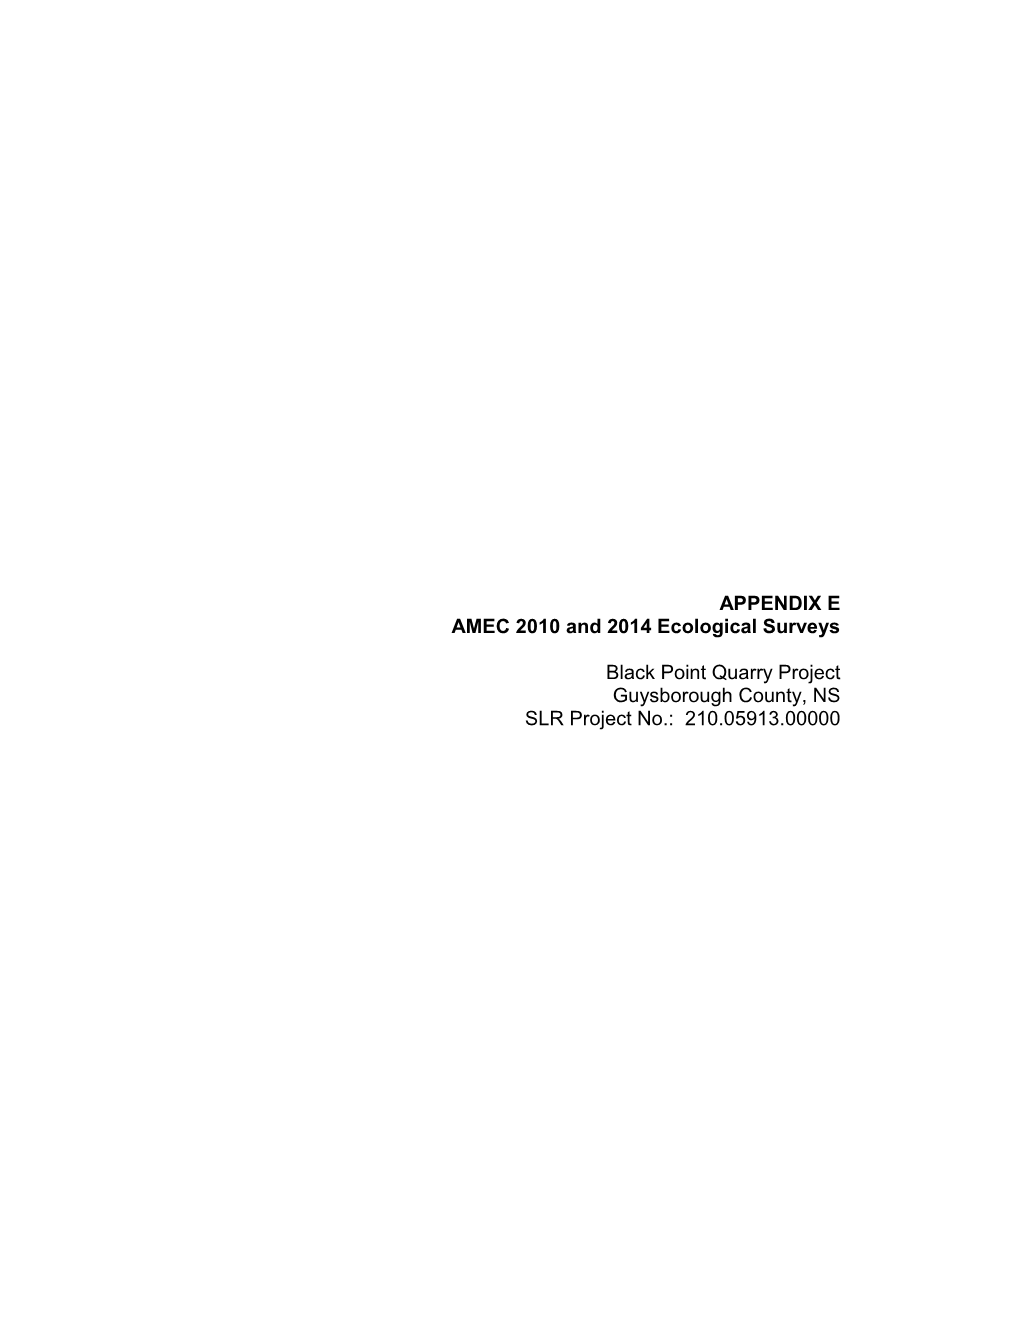 APPENDIX E AMEC 2010 and 2014 Ecological Surveys